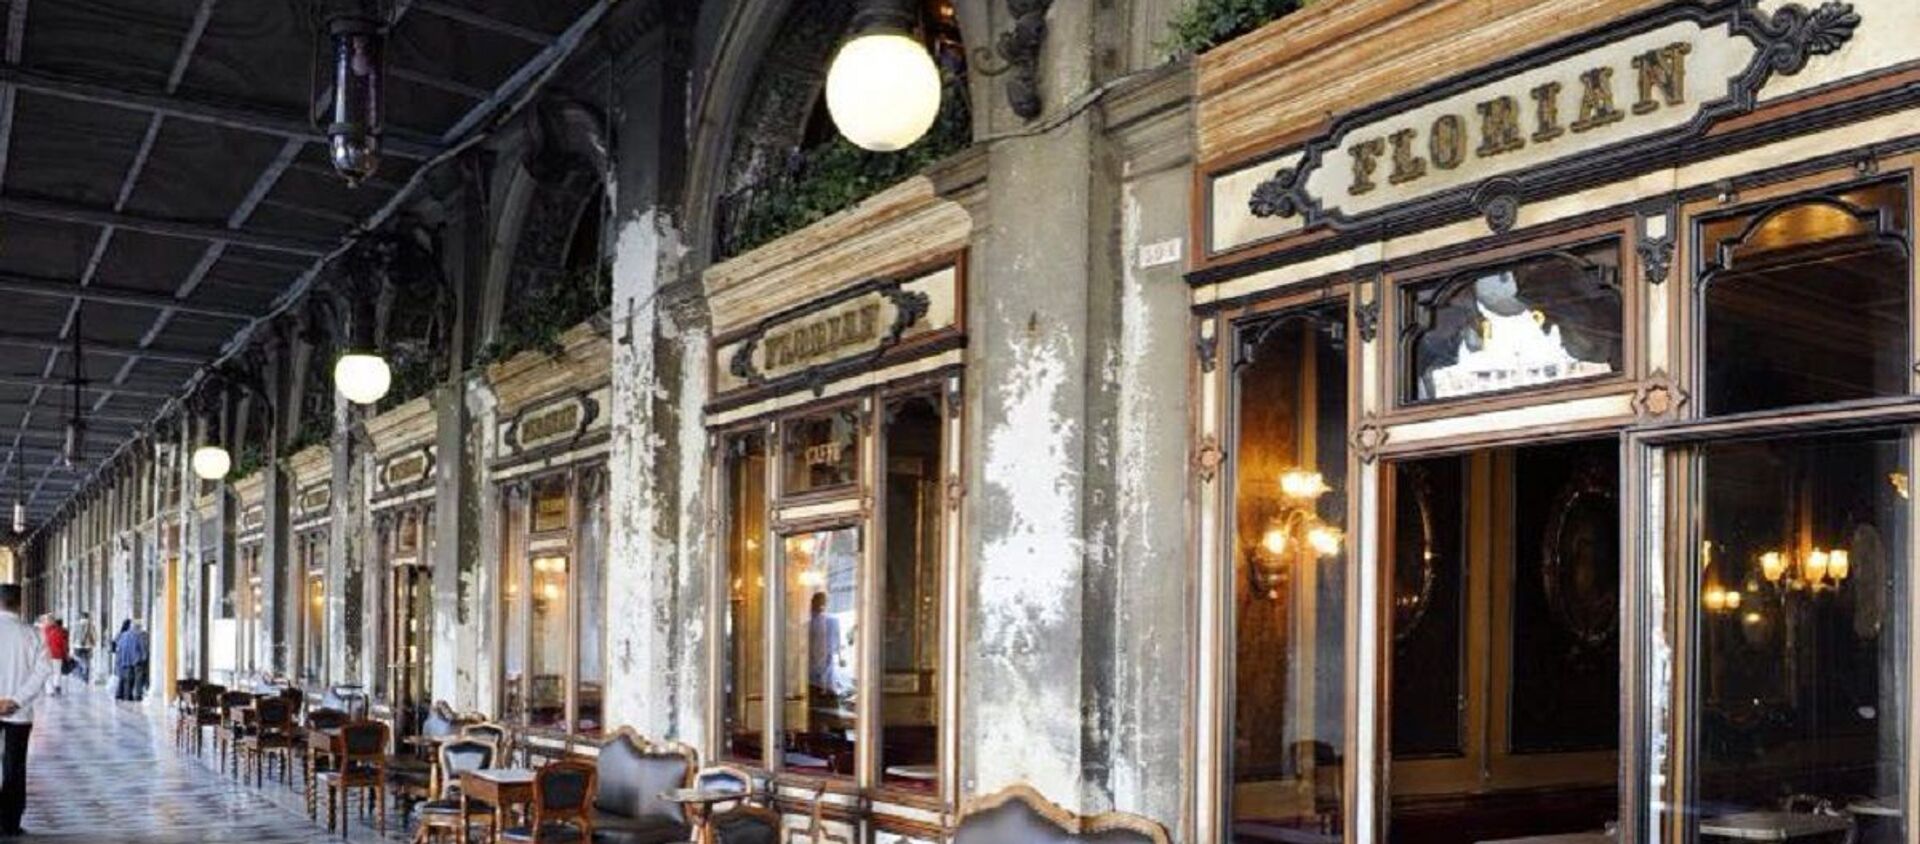 Café Florian en Venecia - Sputnik Mundo, 1920, 21.01.2021